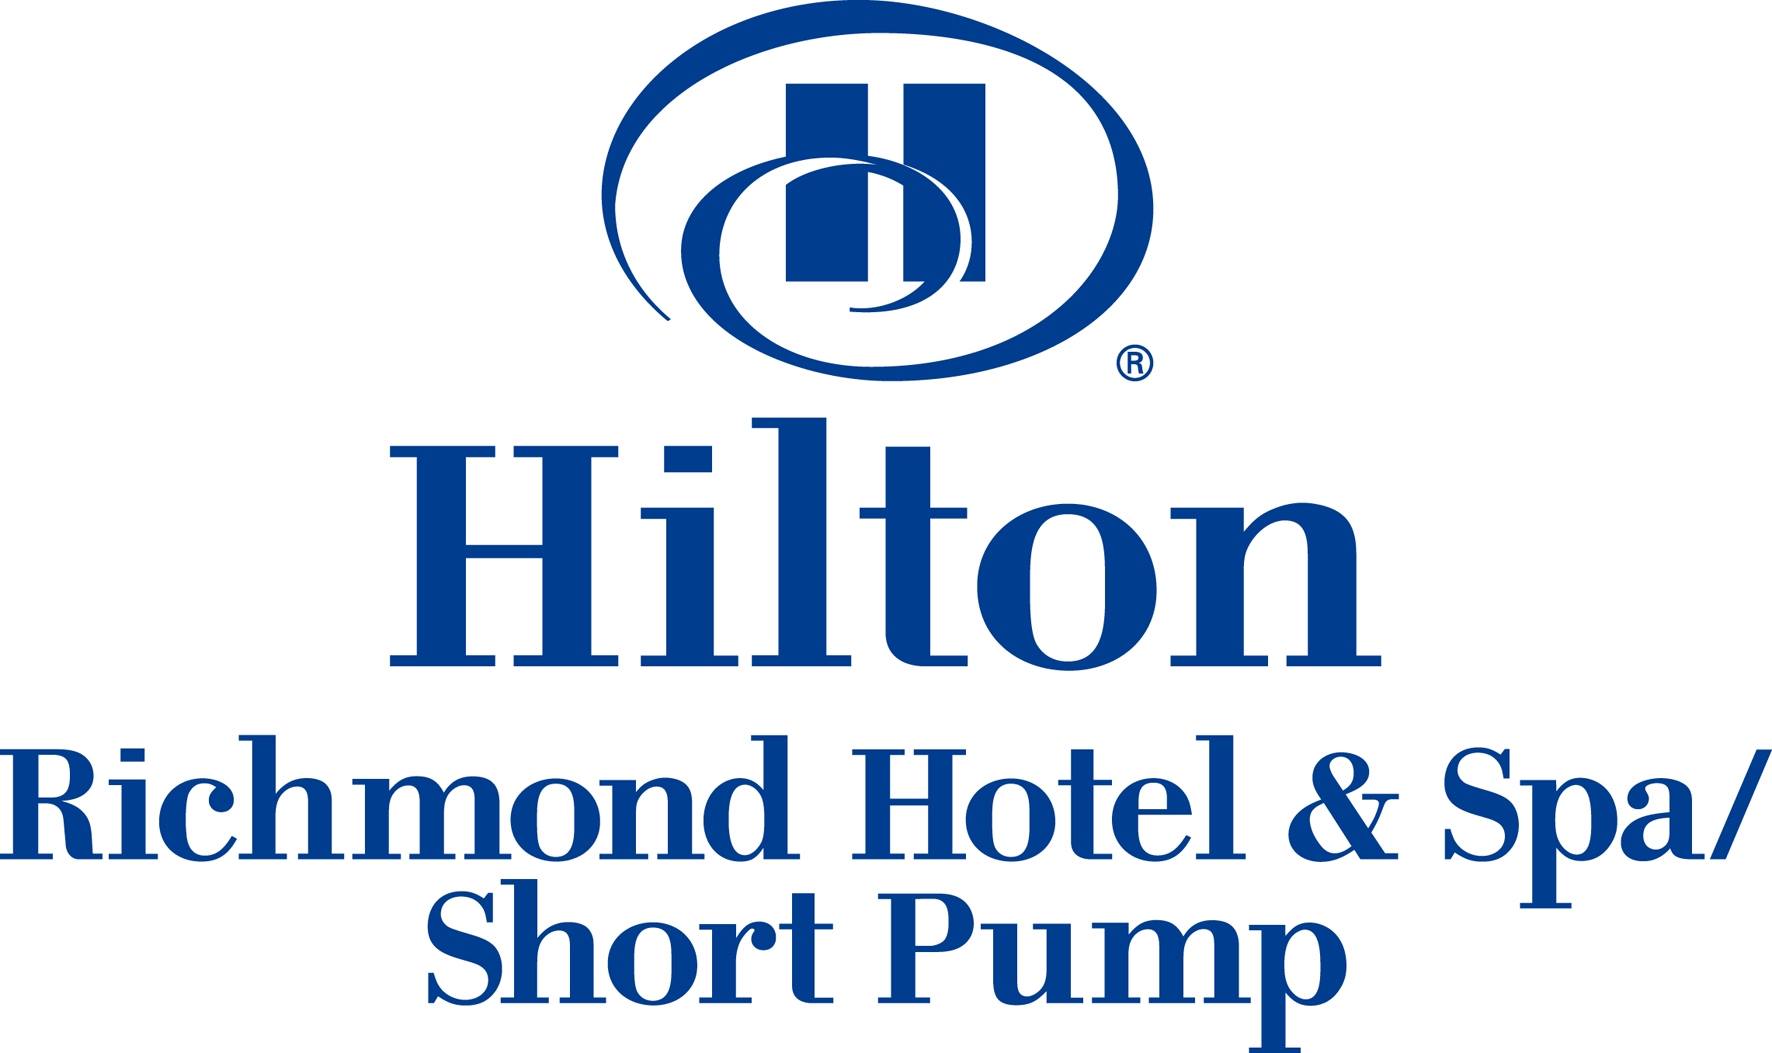 Image result for Hilton Richmond Hotel & Spa/Short Pump